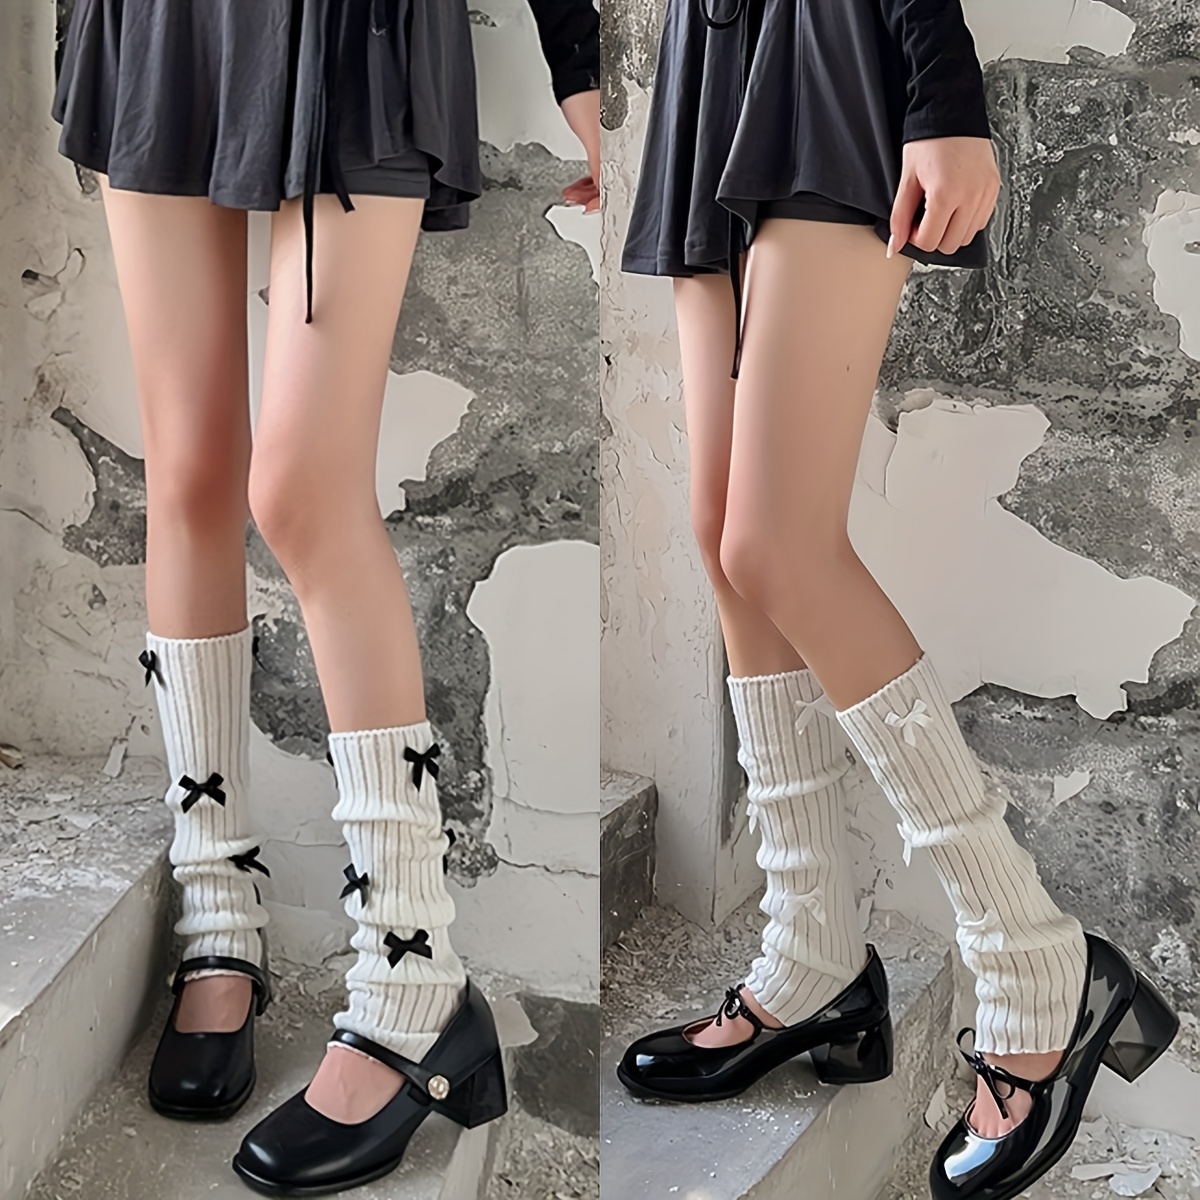 HSMQHJWE White Tights Tights For Tall Women Socks Leg Solid